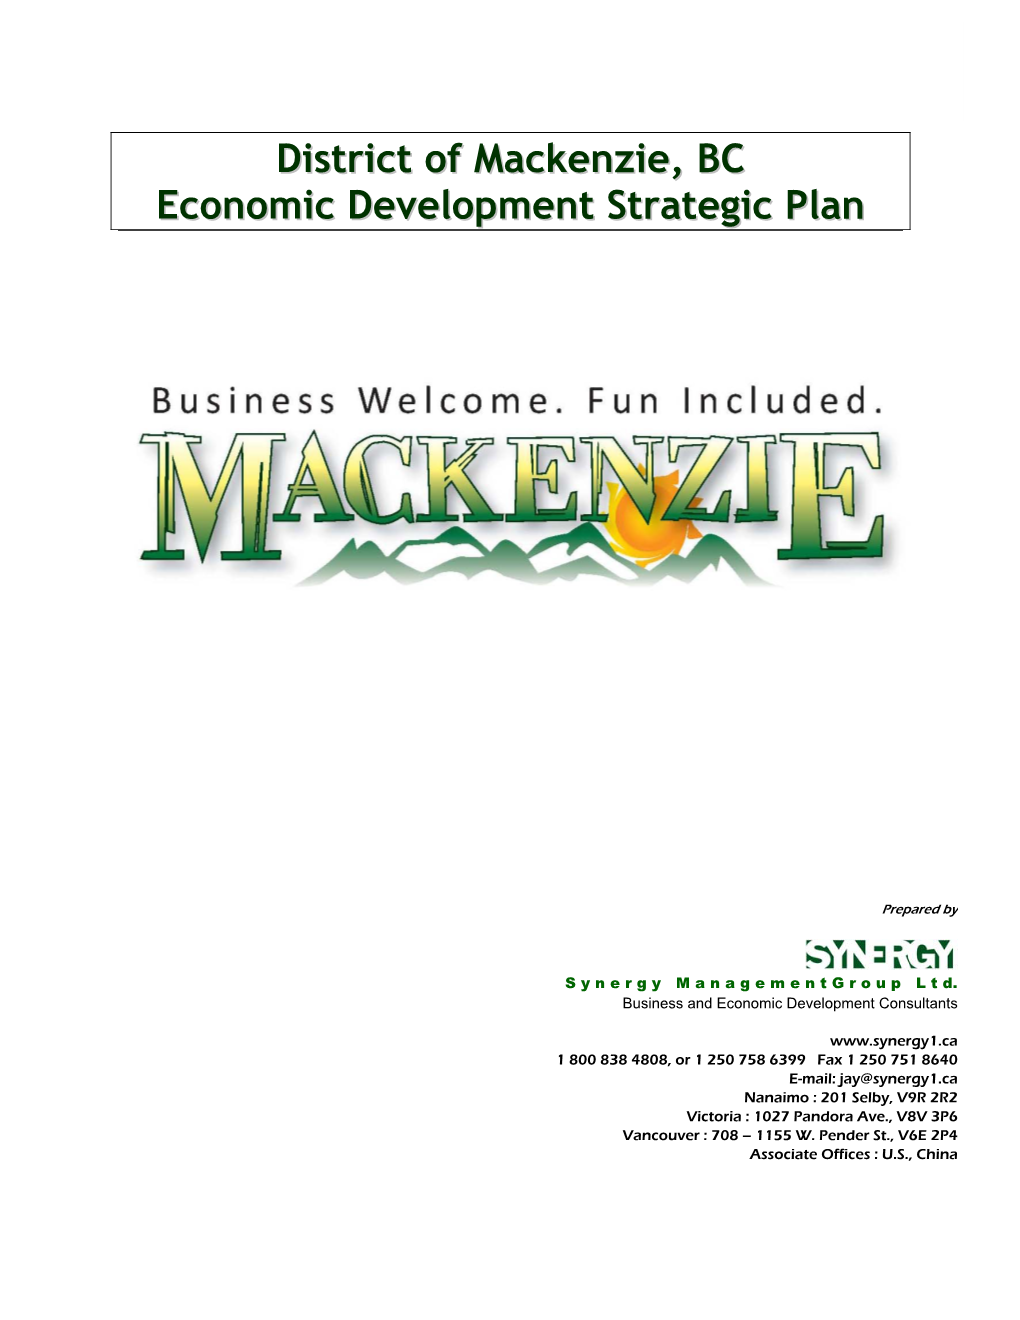 District of Mackenzie, BC Economic Development Strategic Plan